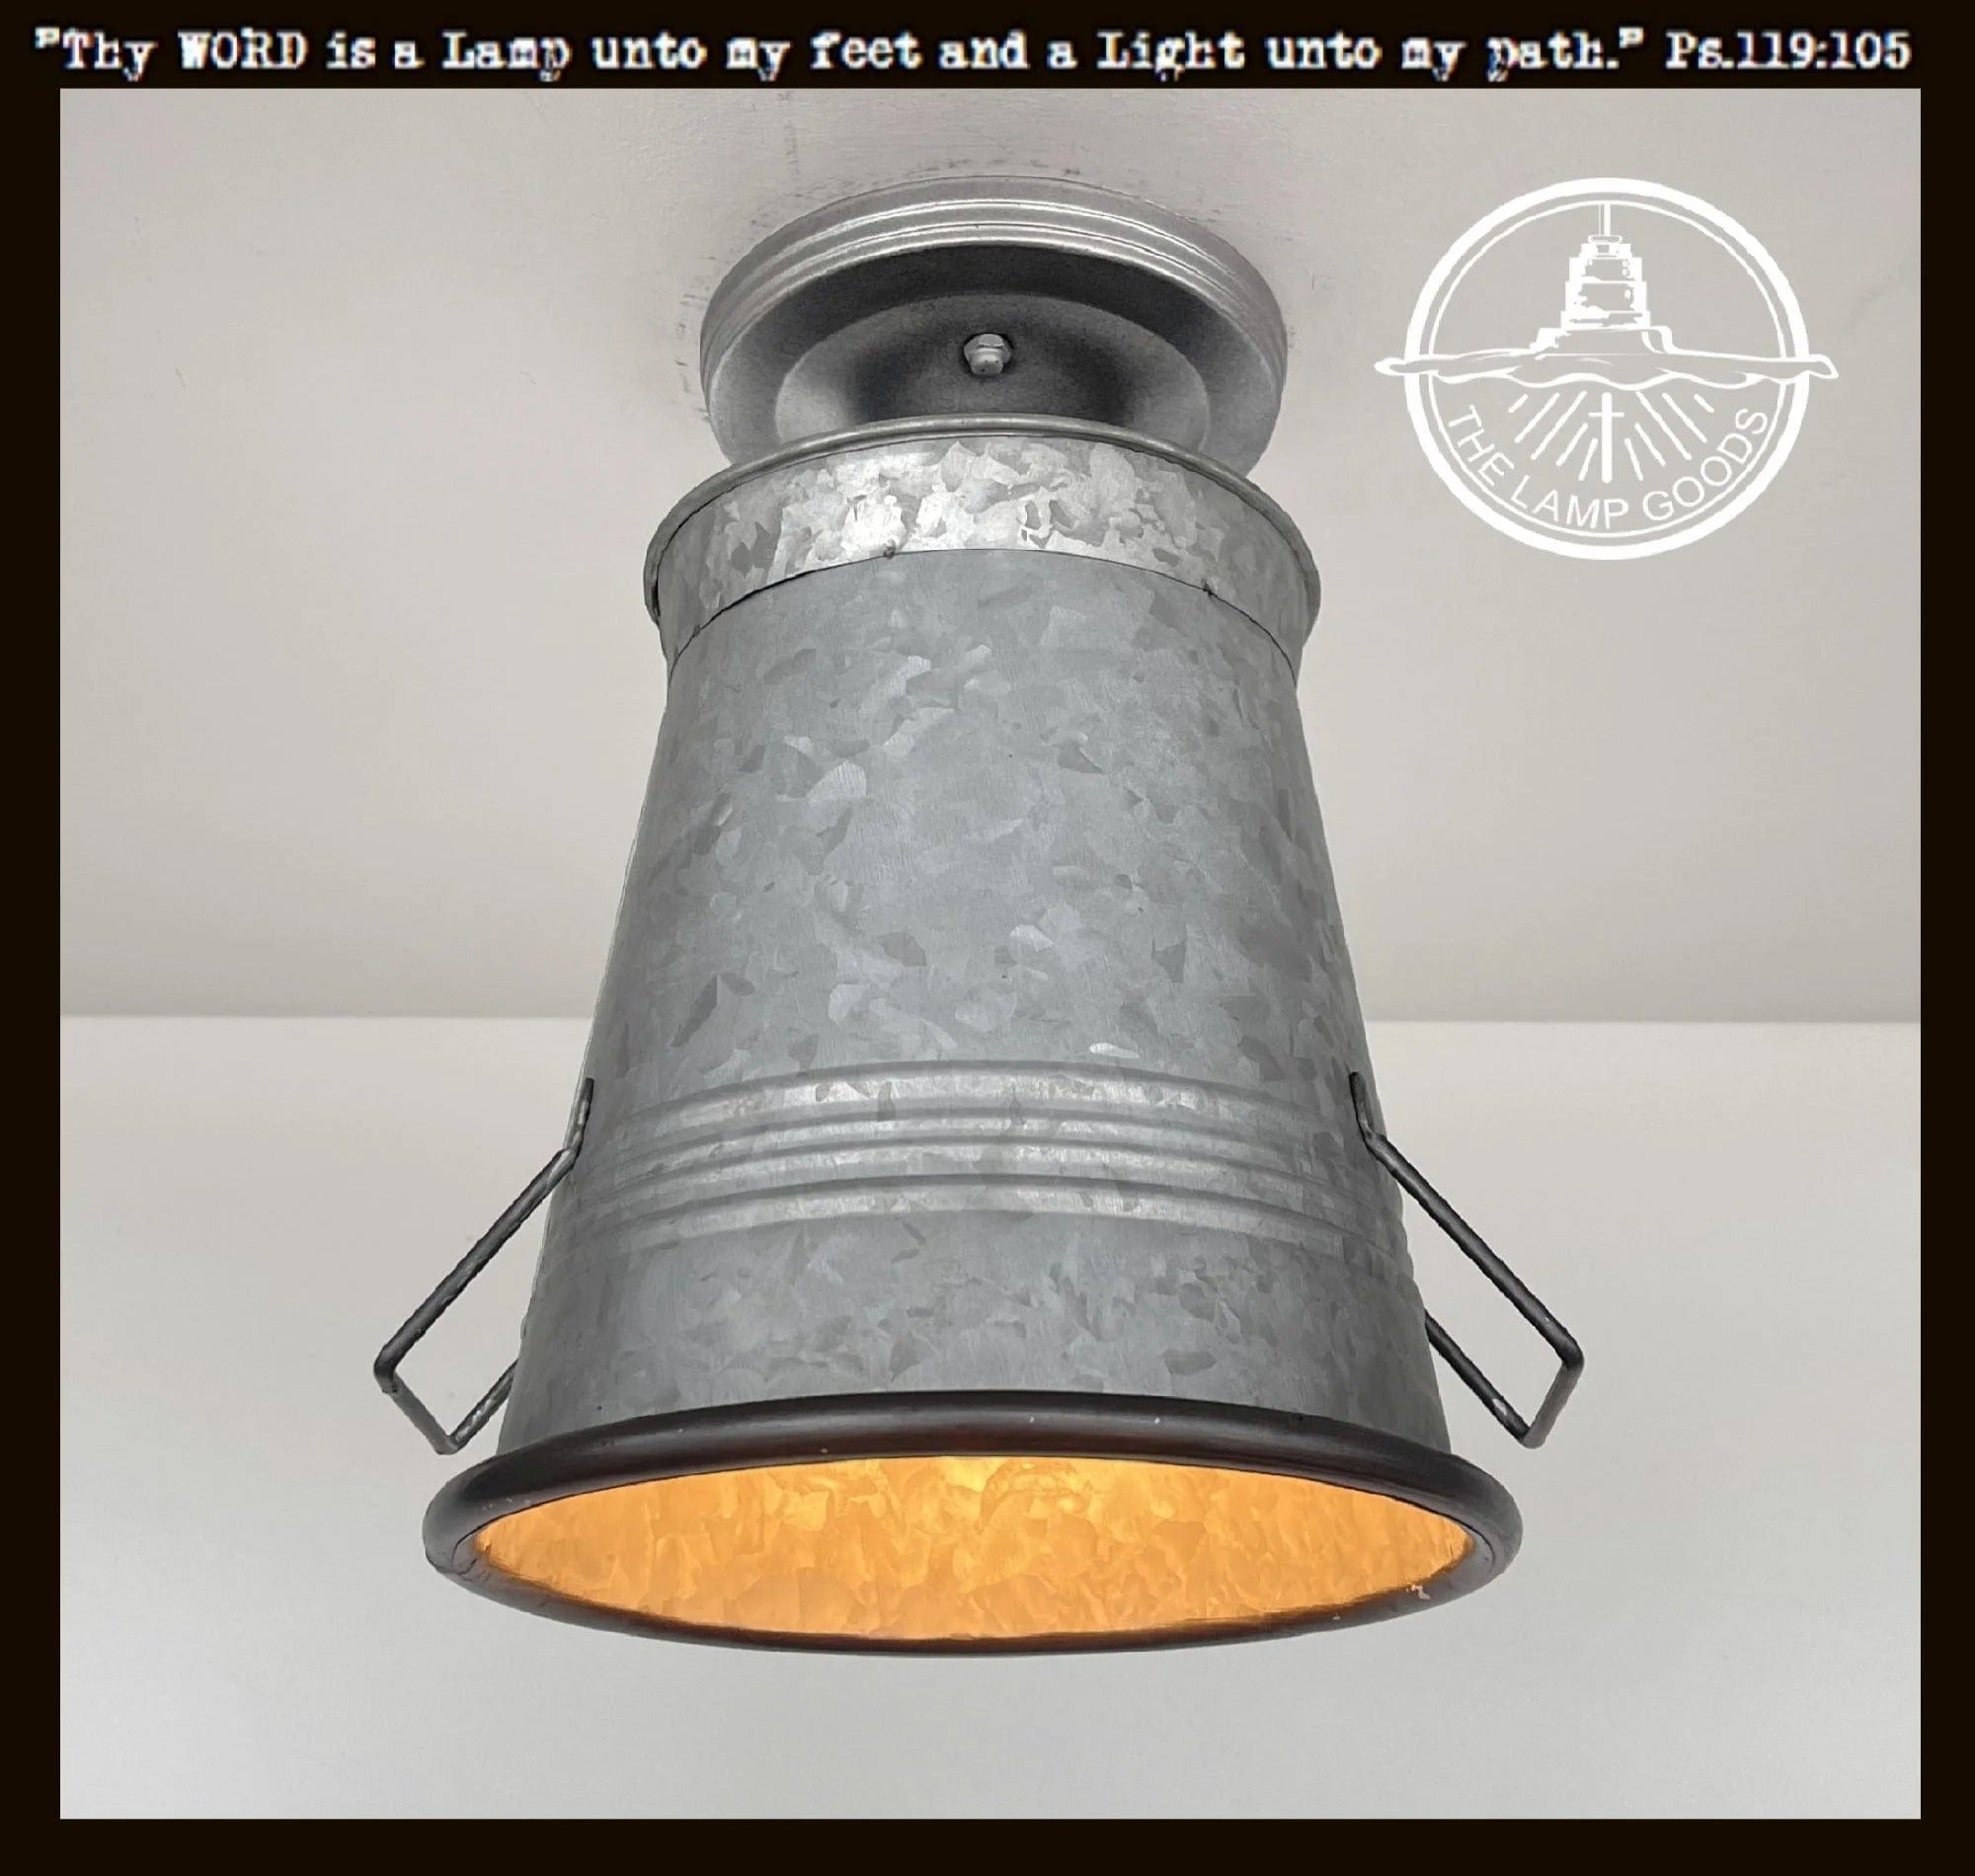 Rustic Galvanized Urn Bucket Ceiling Light The Lamp Goods